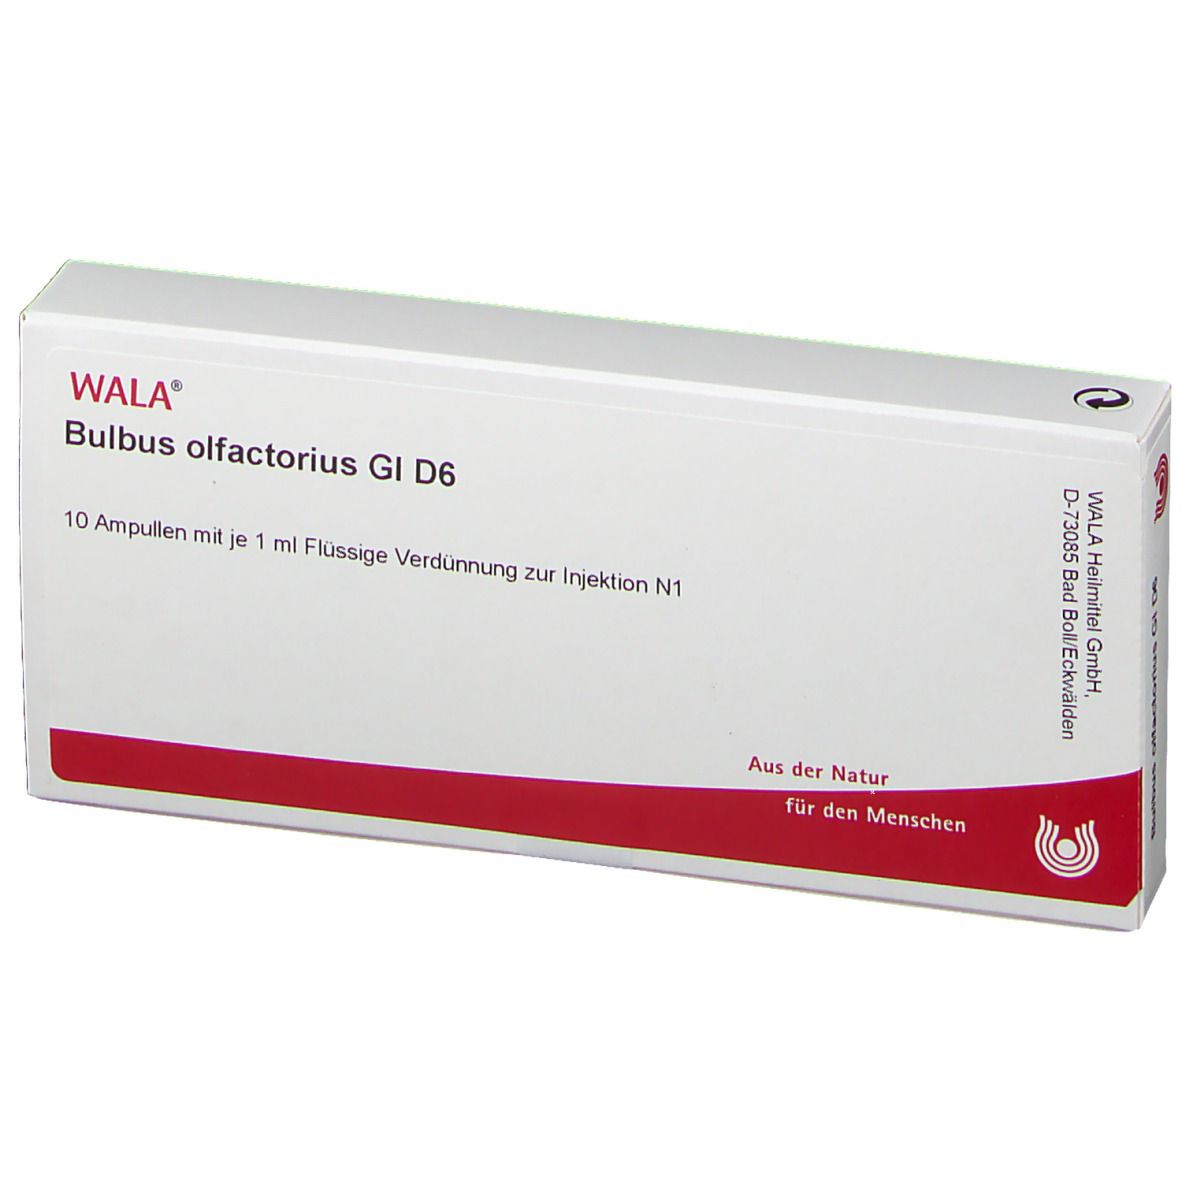 WALA® Bulbus olfactorius Gl D 6